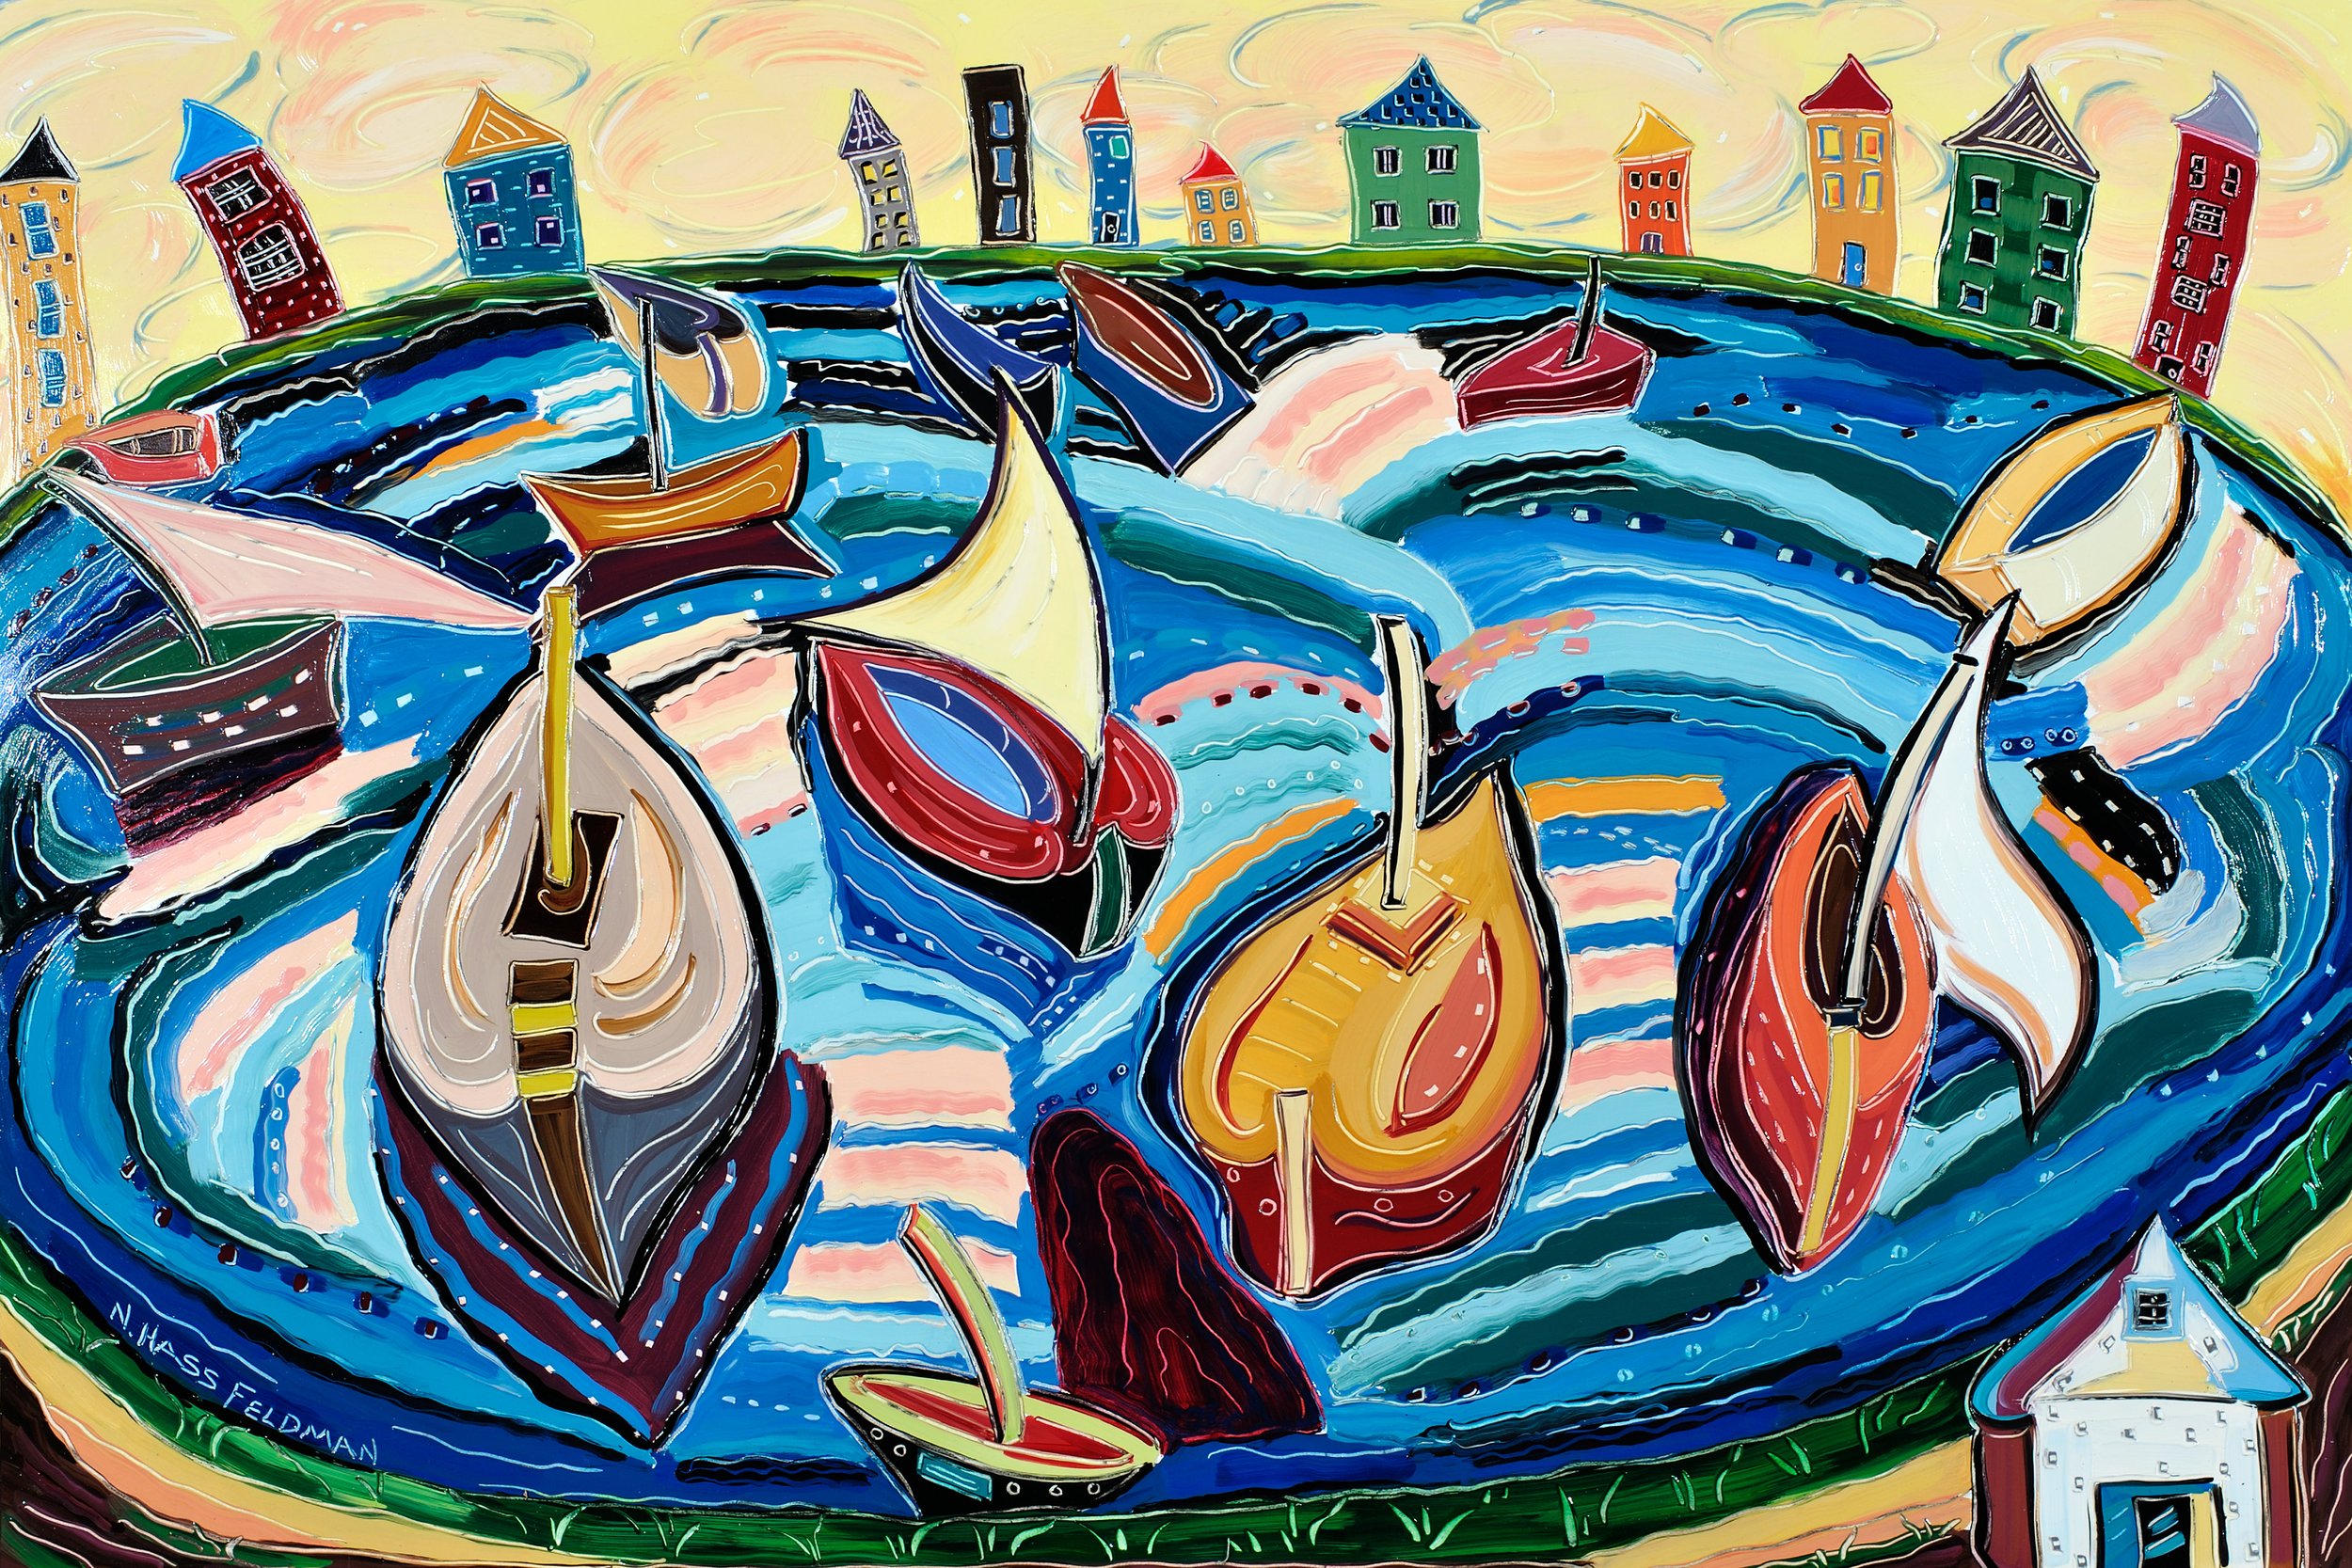   The Boats Come to Yellow Sky   by Nan Haas Feldman 